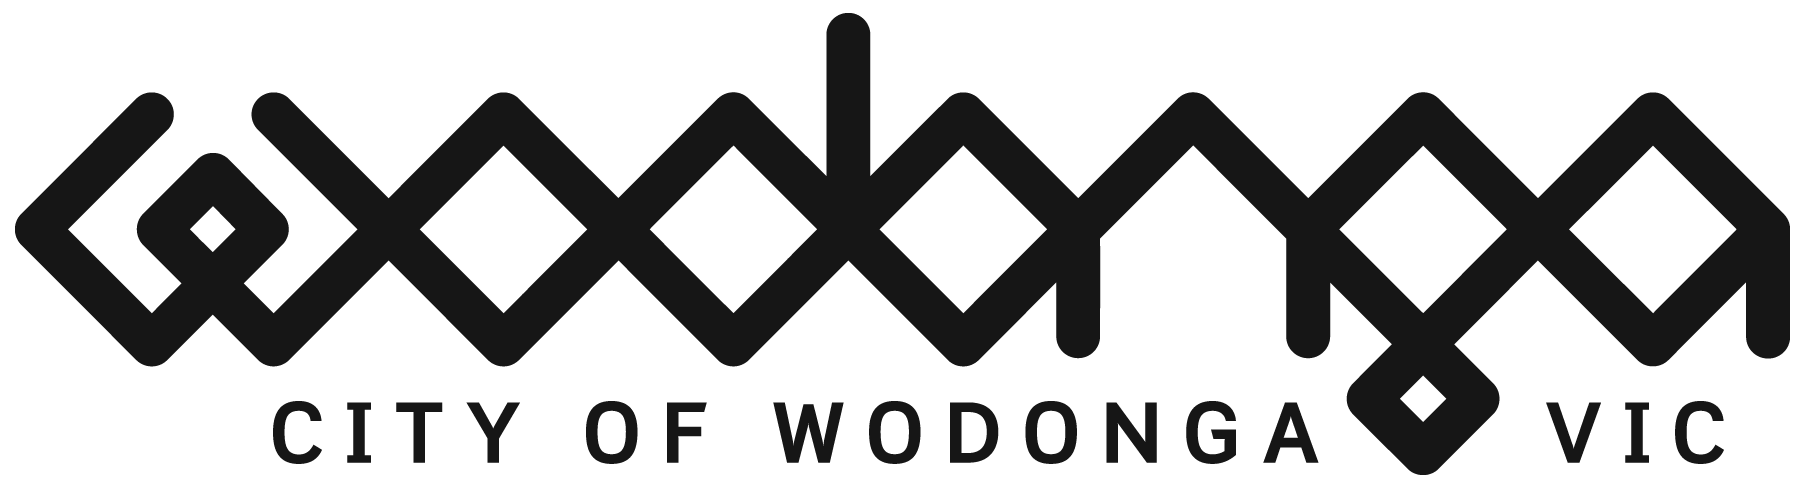 wodonga-city-council